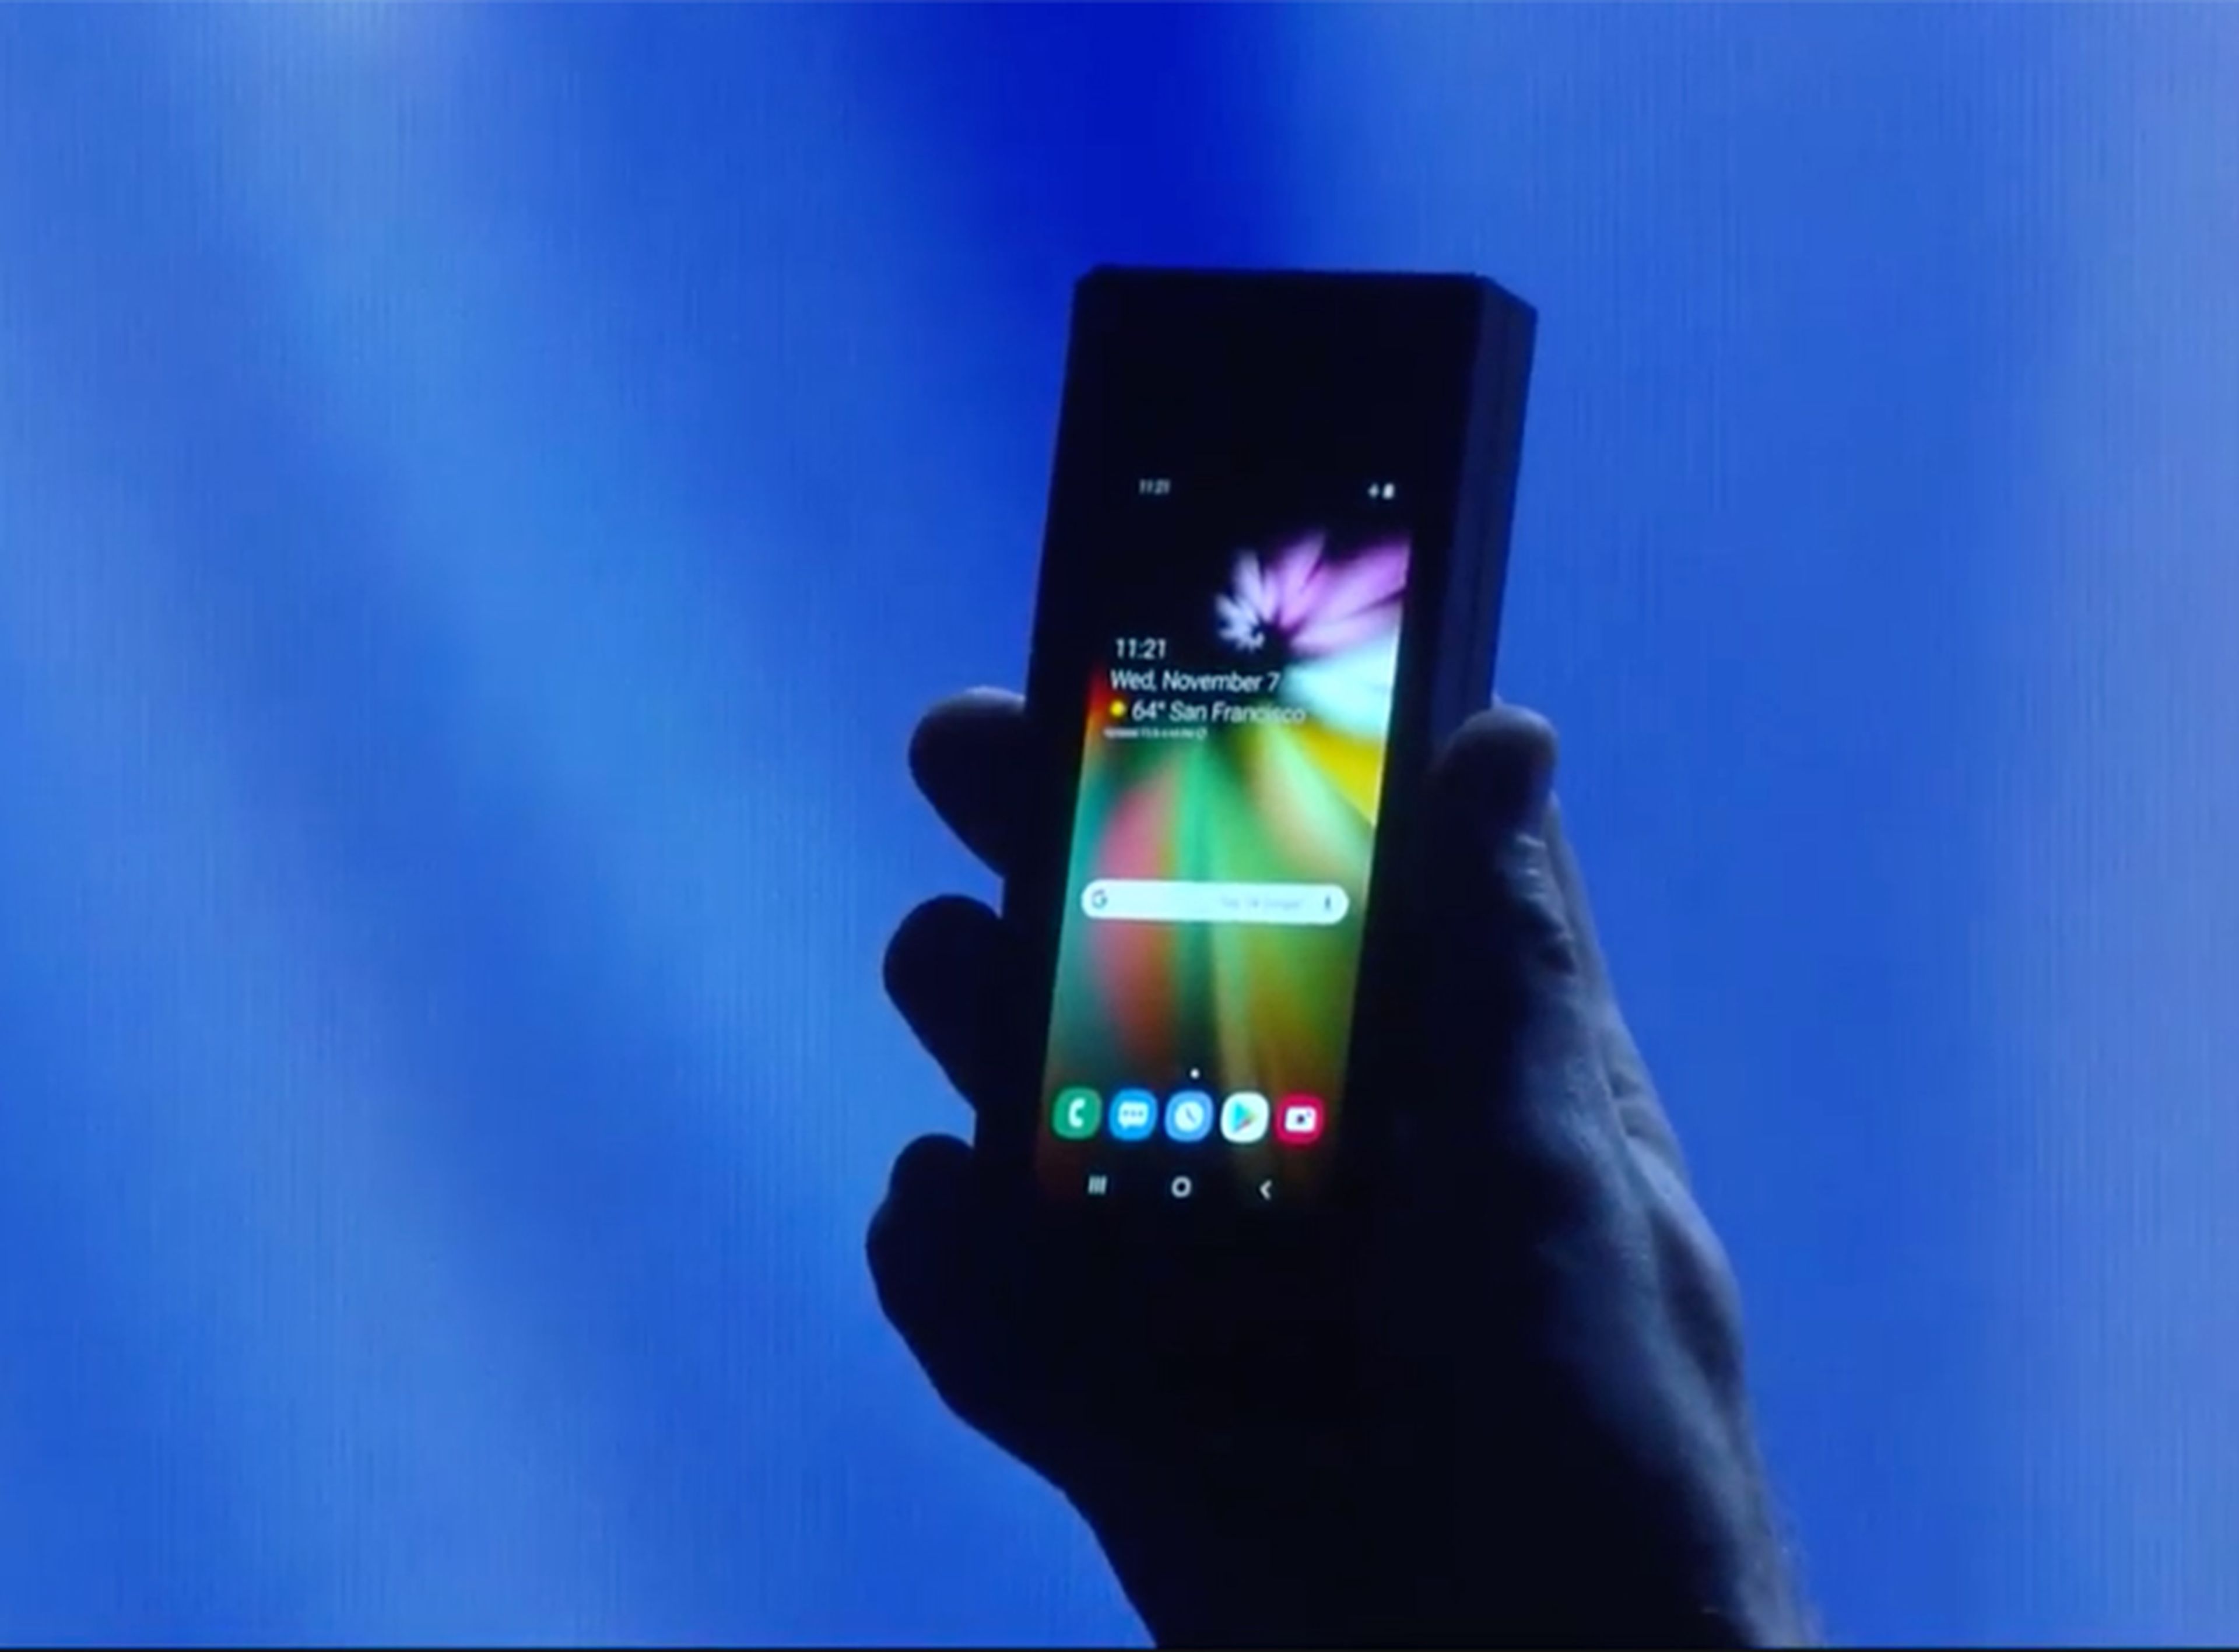 El prototipo de móvil plegable presentado por Samsung, con la pantalla plegada.